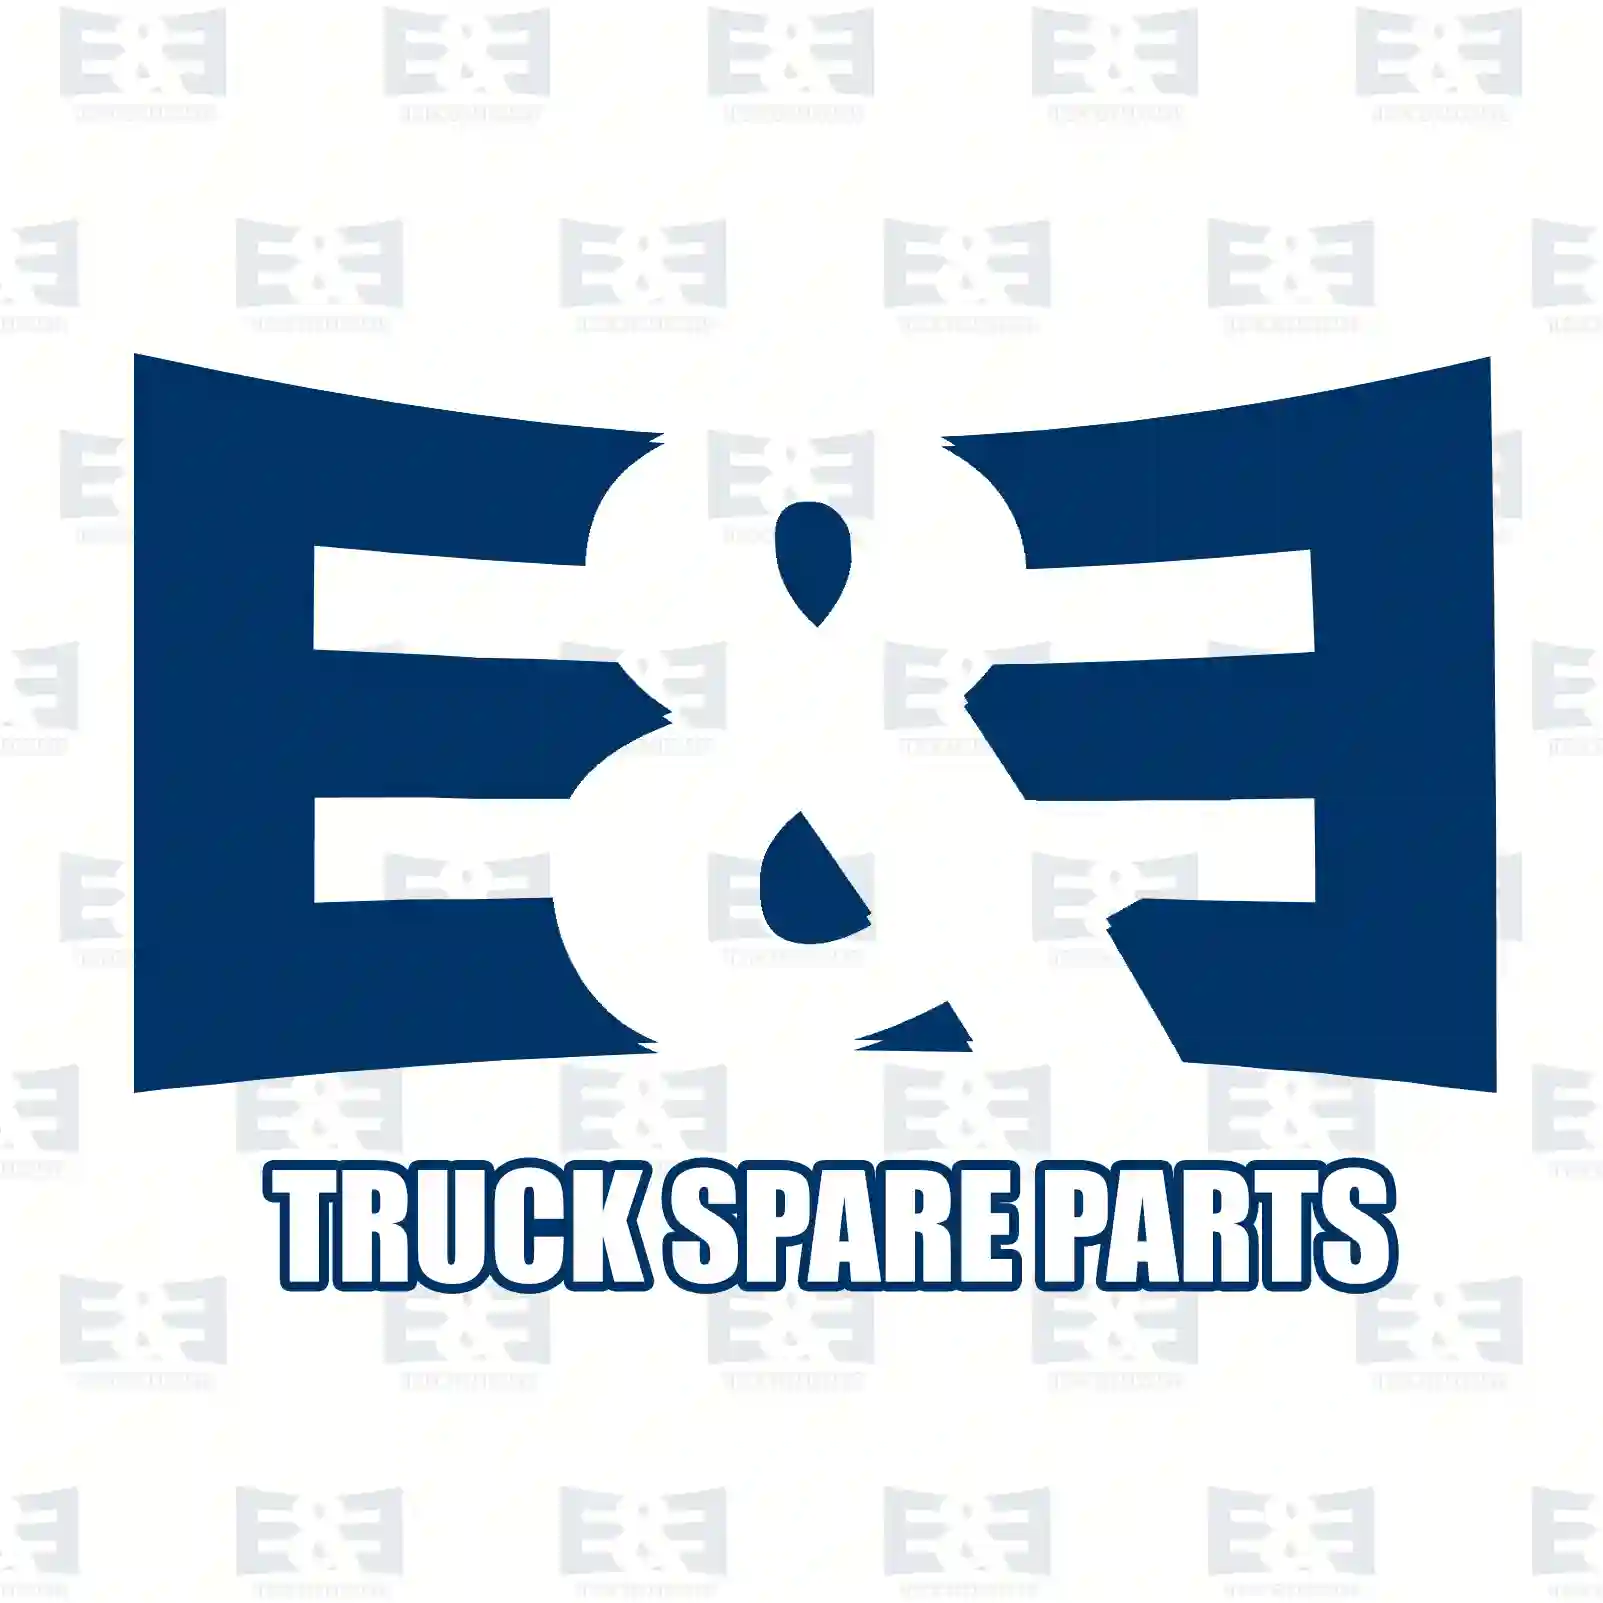 Cover, headlamp, left, 2E2297845, 7810R1, 7810X0, 735425397, 7810R1, 7810X0 ||  2E2297845 E&E Truck Spare Parts | Truck Spare Parts, Auotomotive Spare Parts Cover, headlamp, left, 2E2297845, 7810R1, 7810X0, 735425397, 7810R1, 7810X0 ||  2E2297845 E&E Truck Spare Parts | Truck Spare Parts, Auotomotive Spare Parts